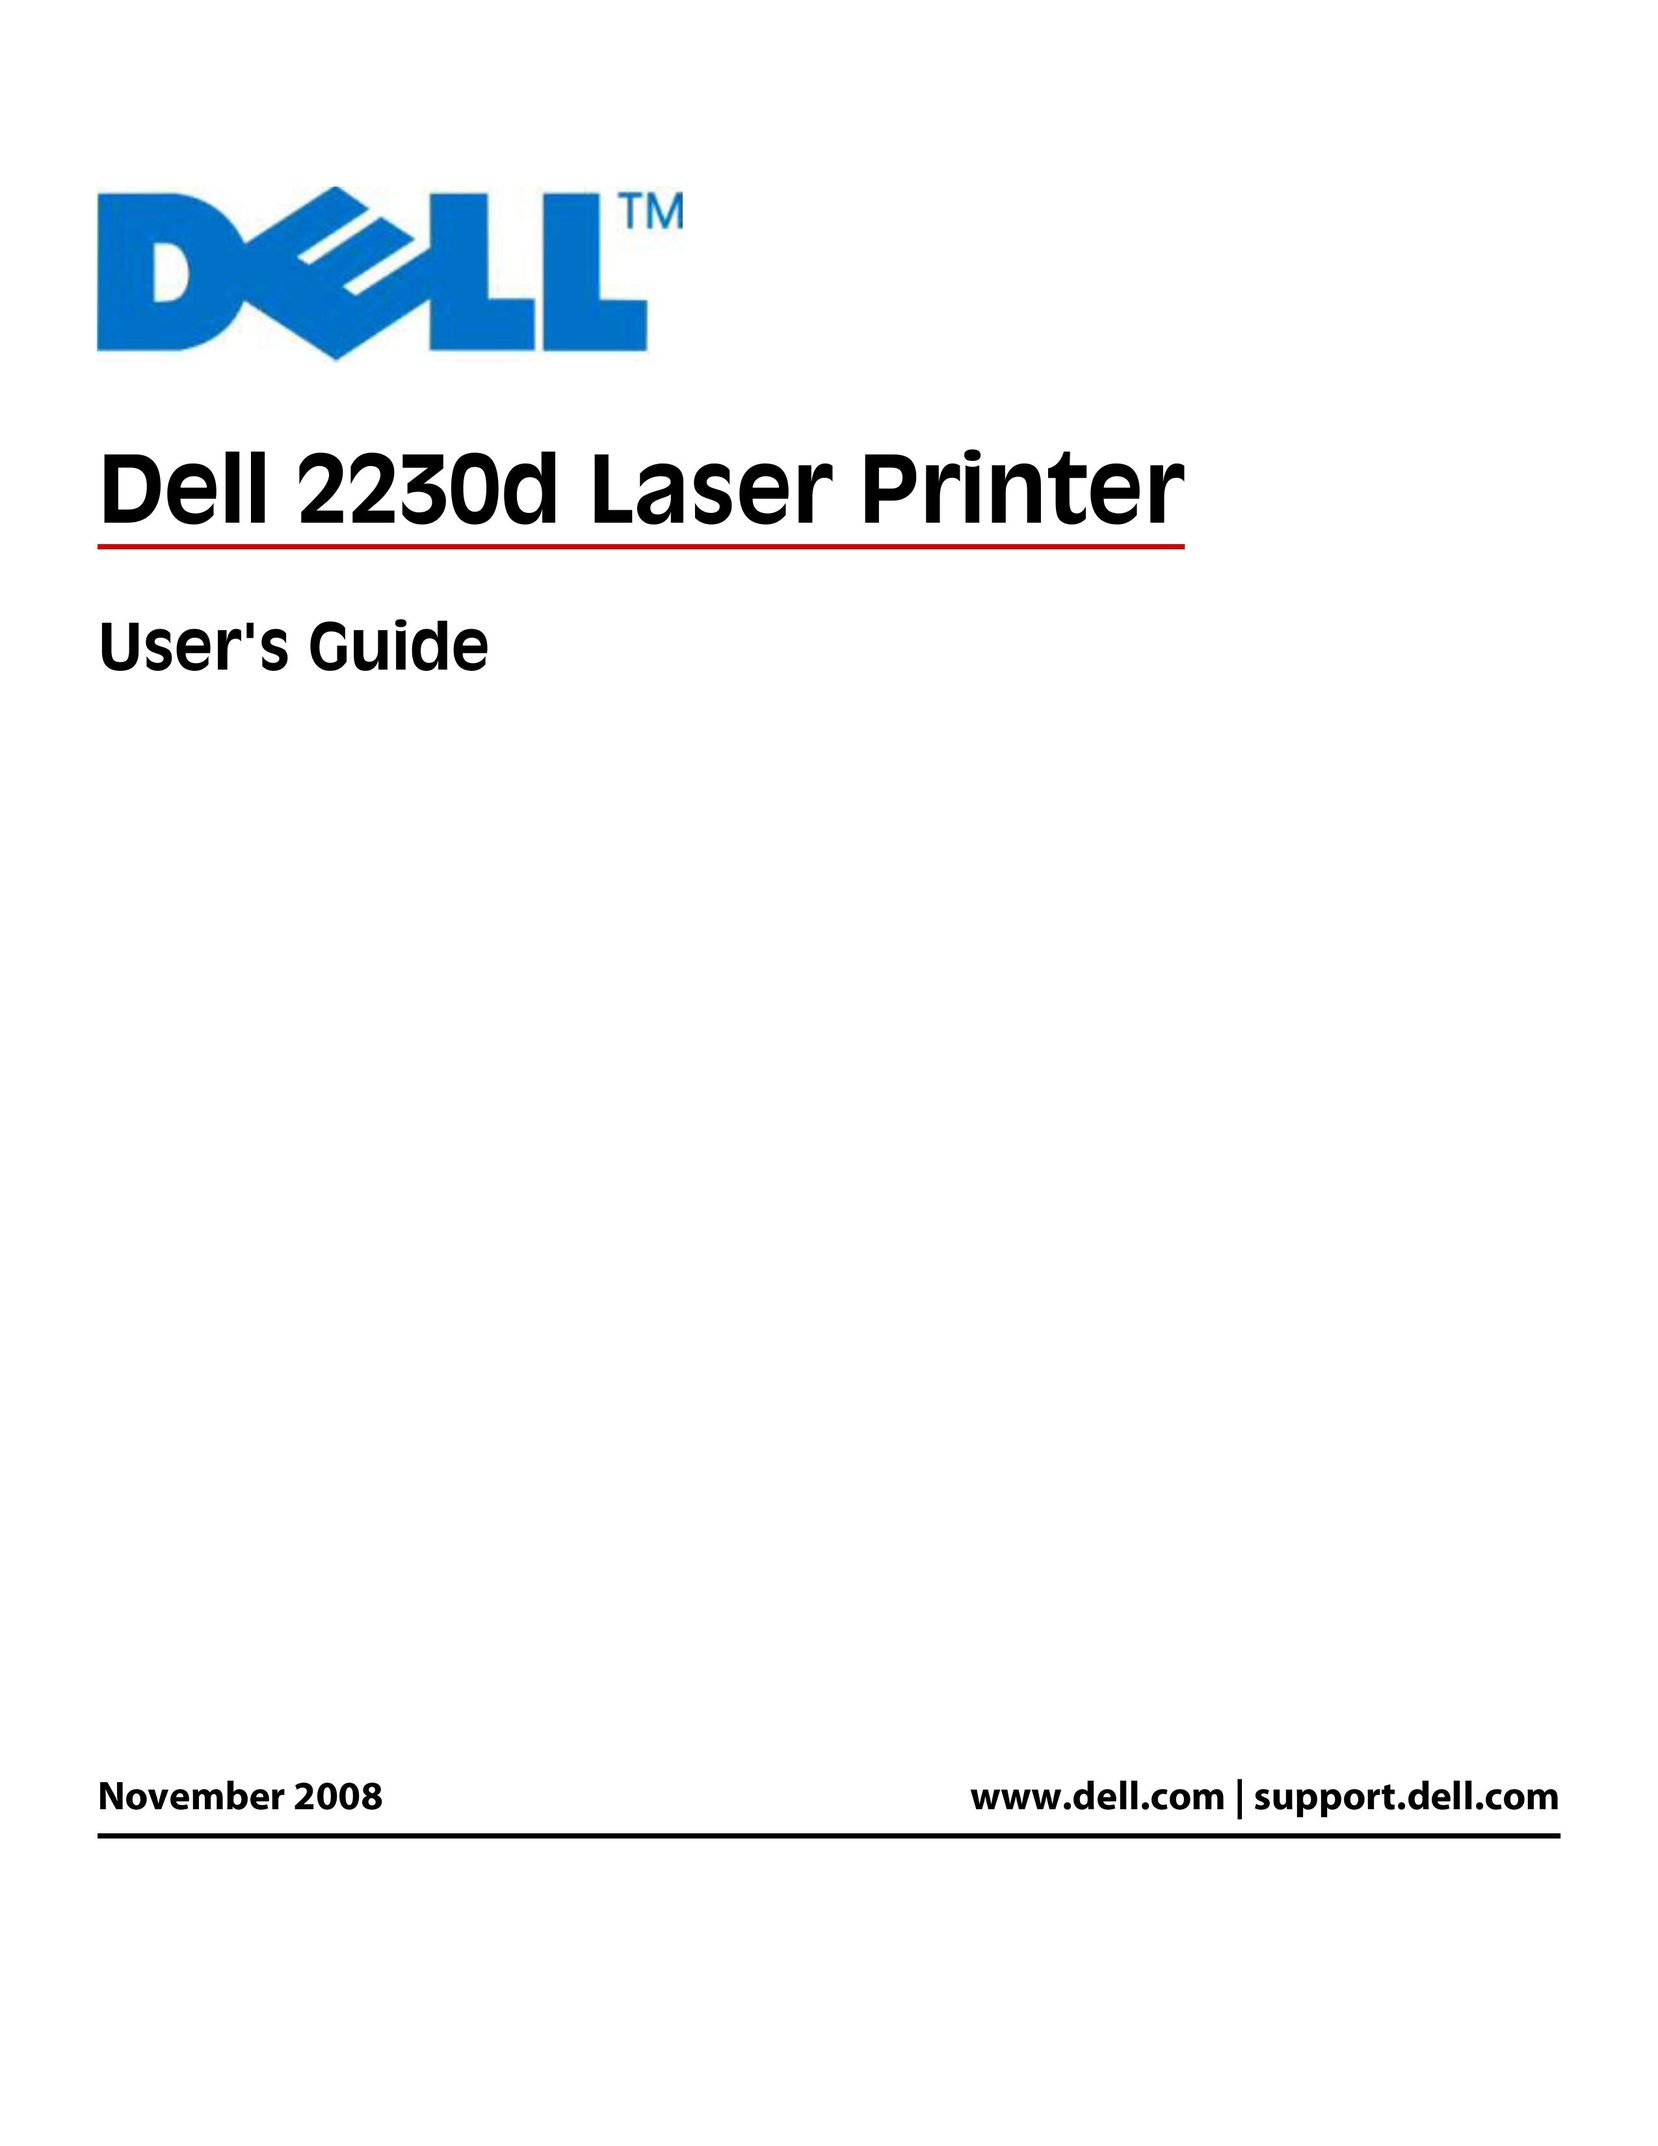 Dell 2230d Printer User Manual